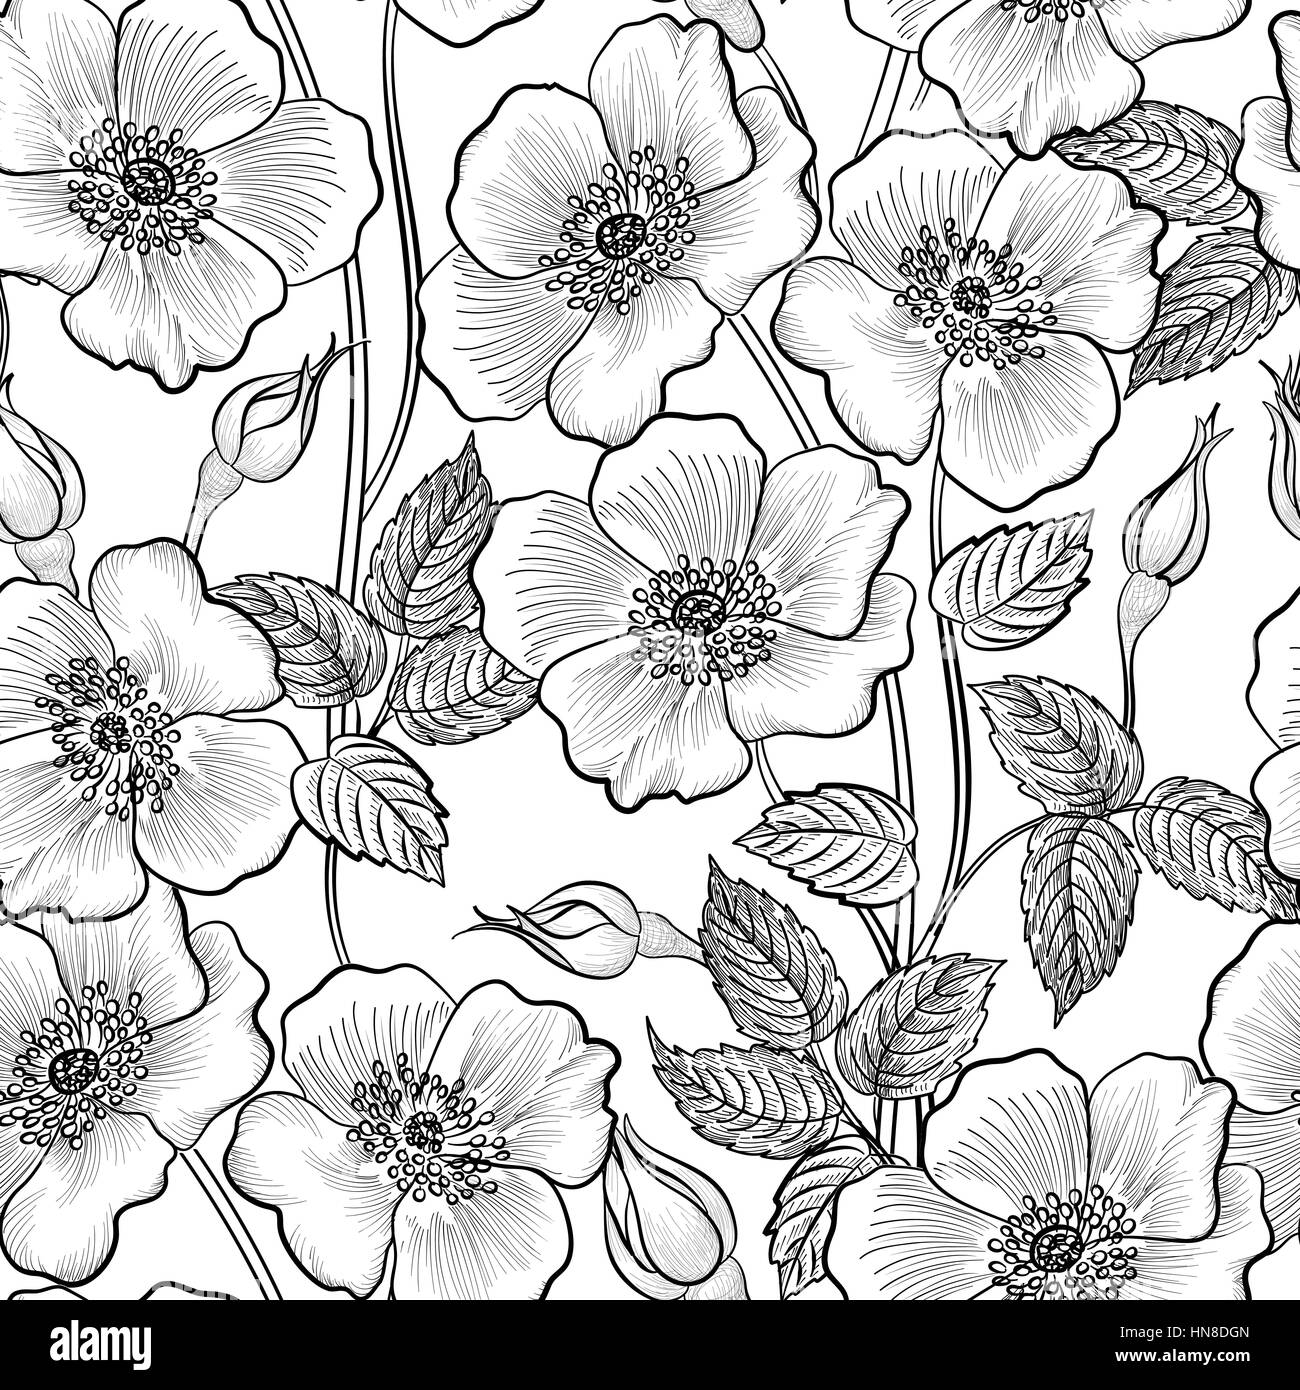 Free Vector  Hand drawn flower sketch style design background